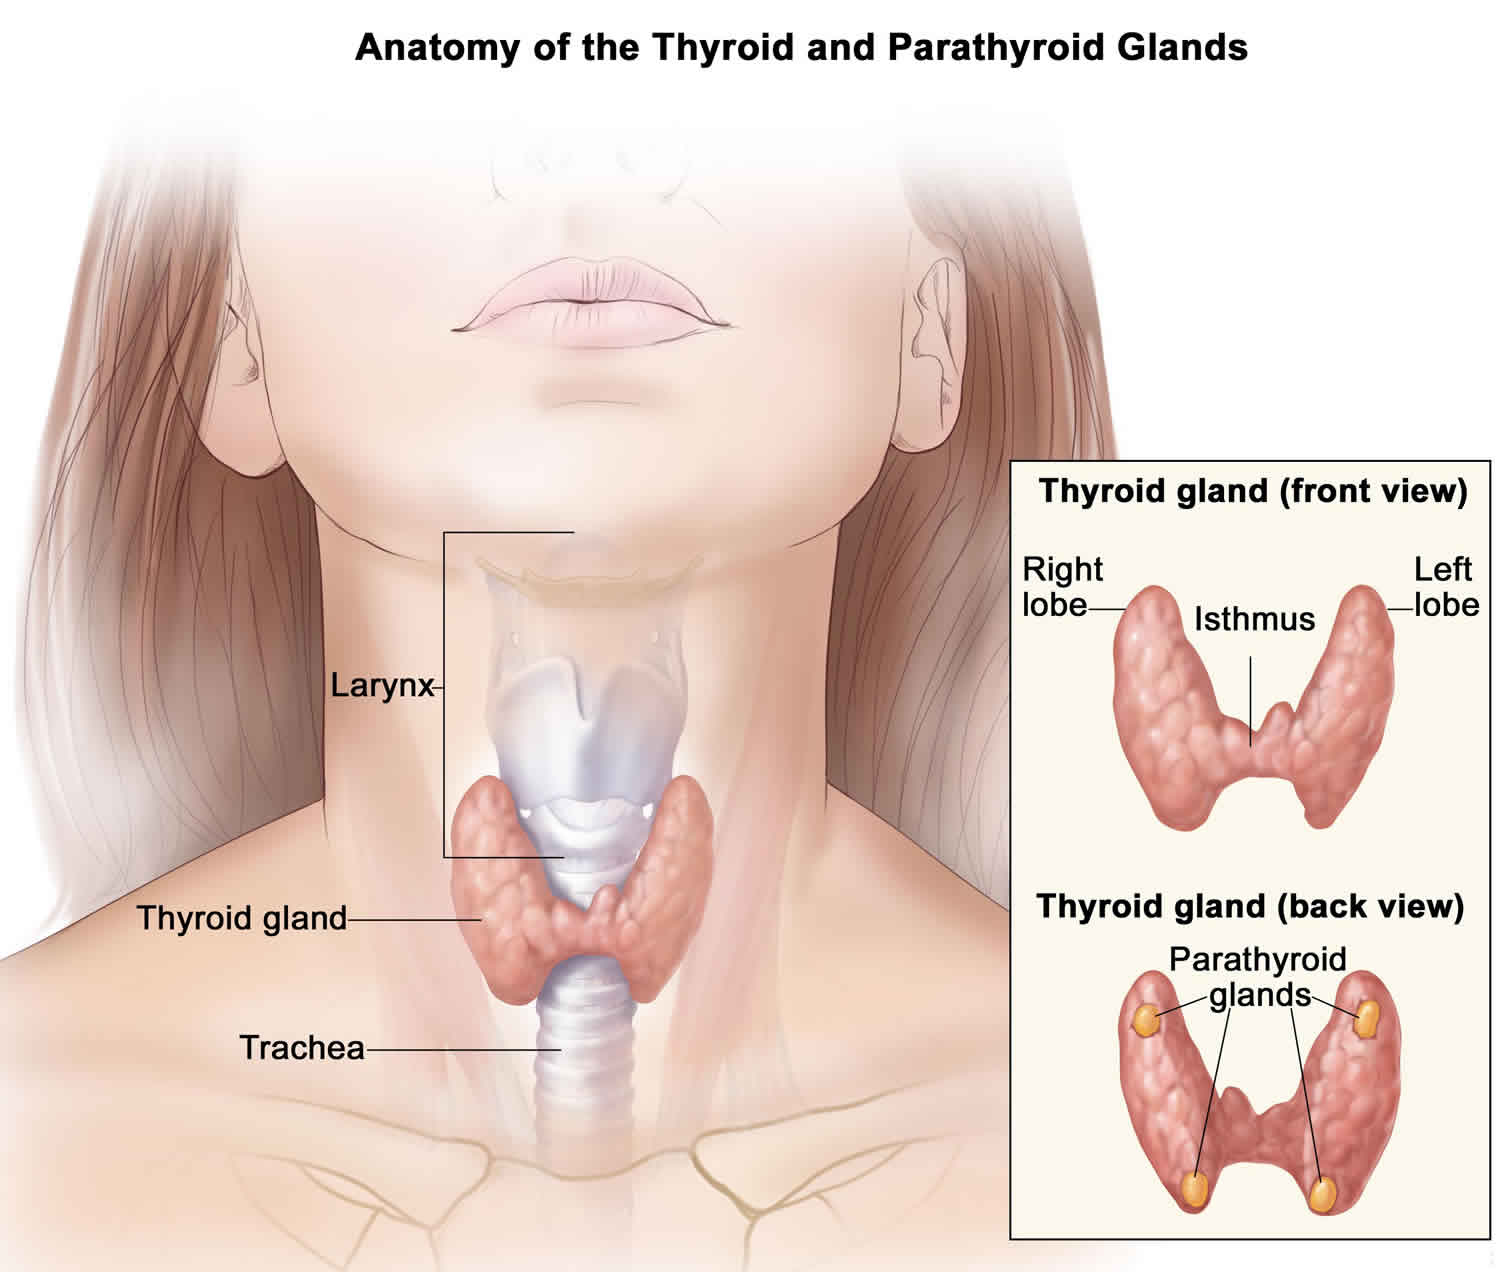 Parathyroidectomy